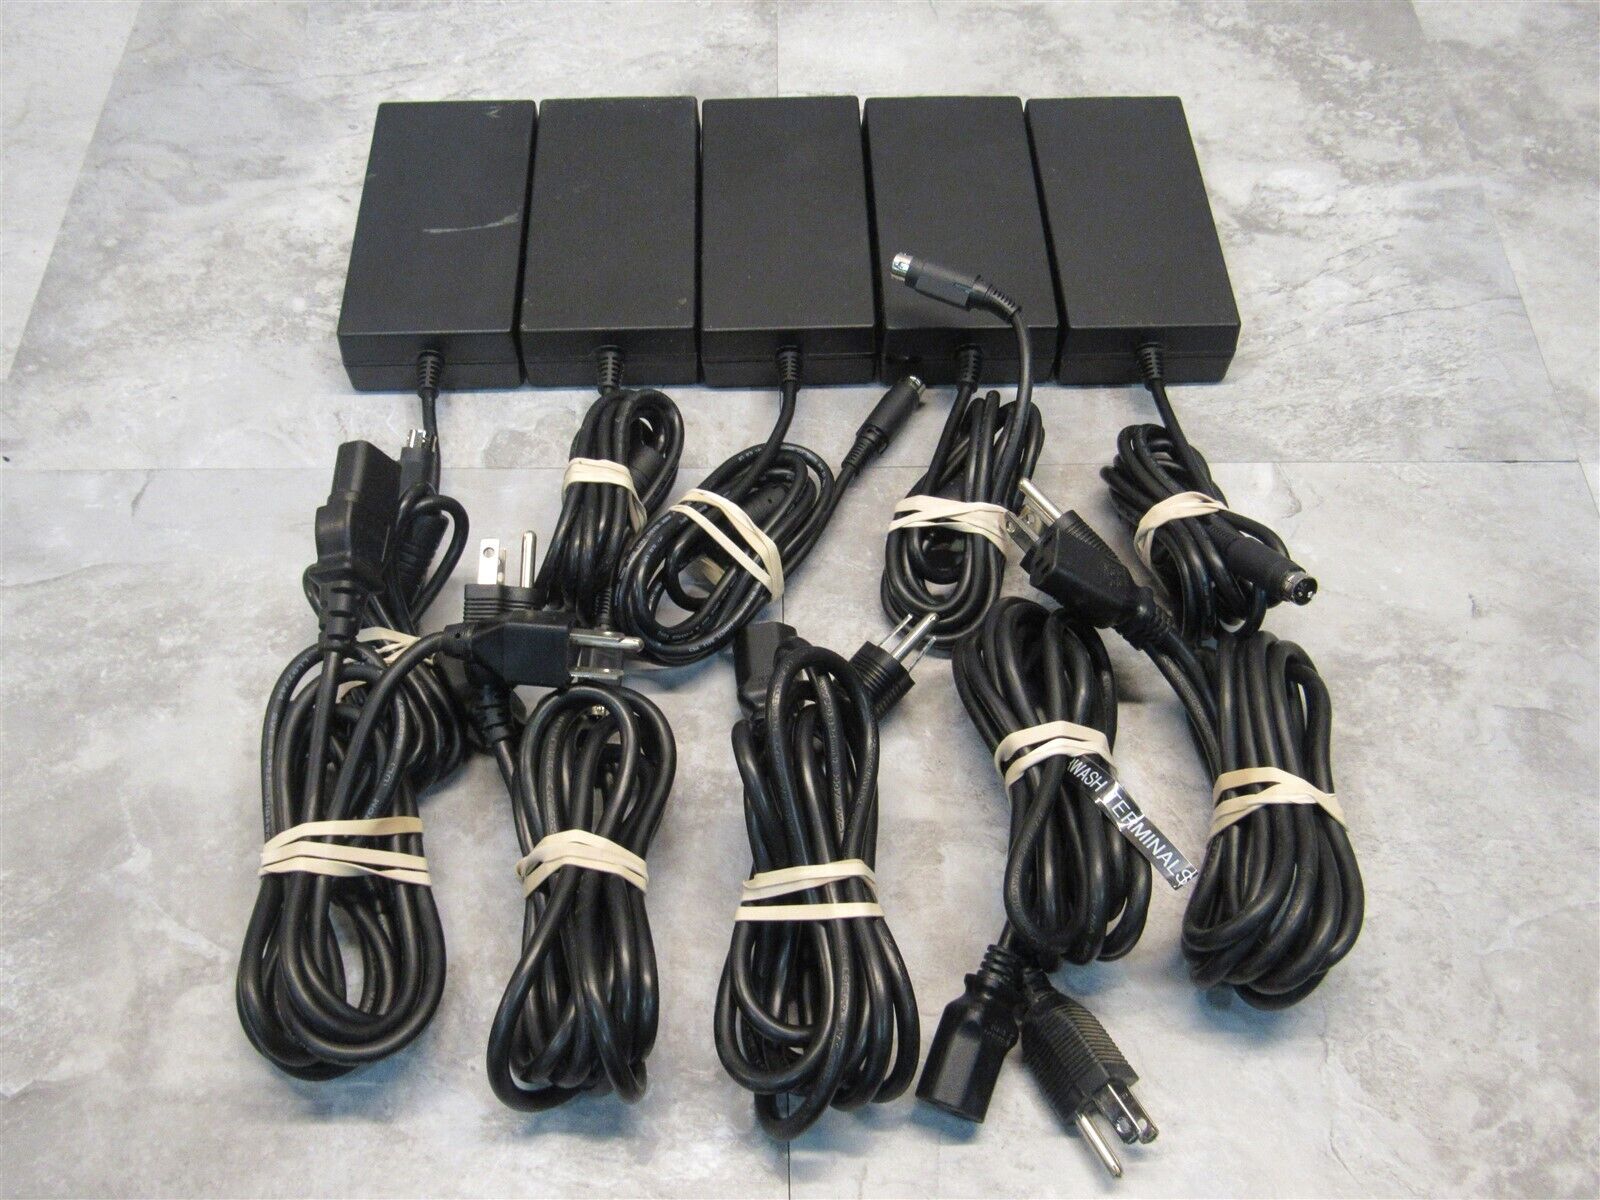 5 LOT - Genuine Epson PS-180 24V AC Power Adapter for TM-U220 TM-T88VI Printer